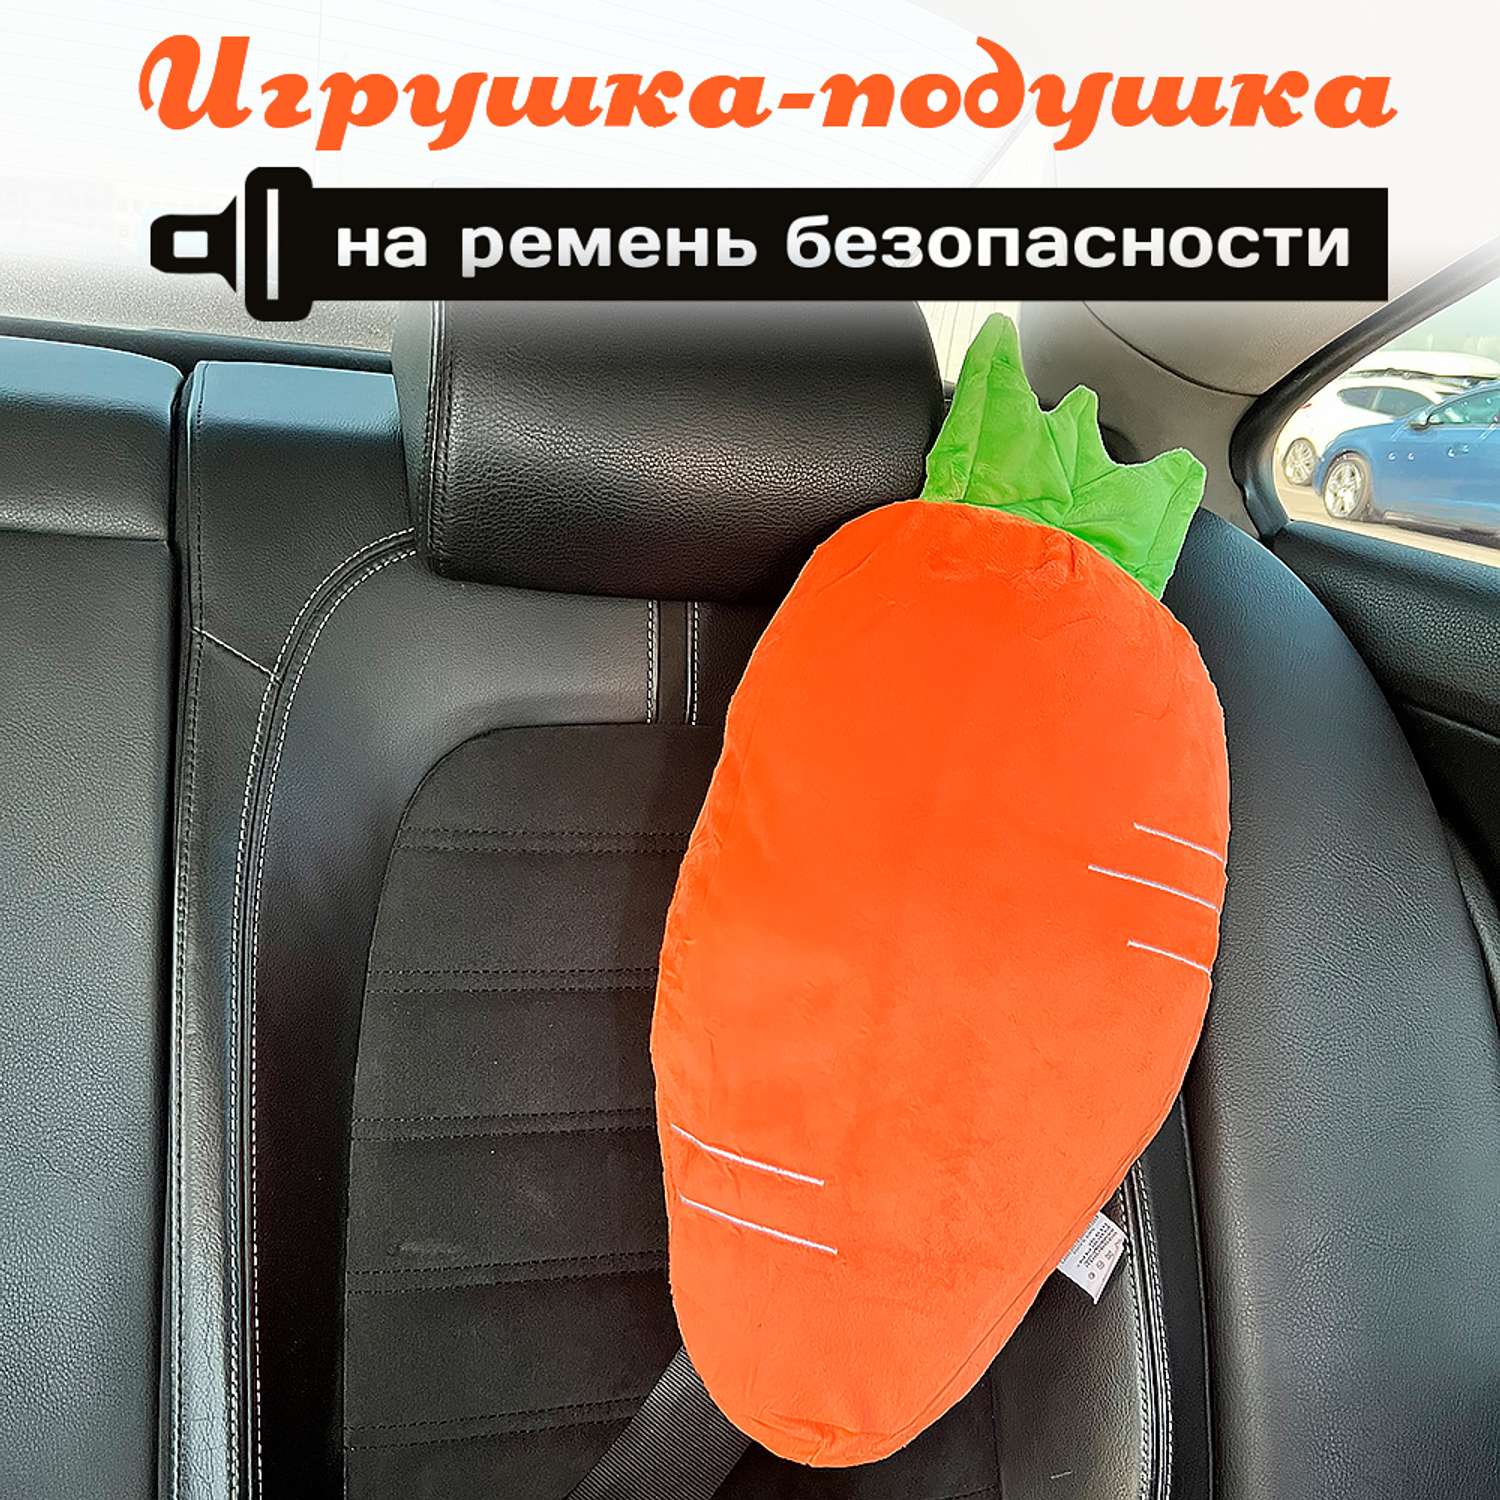 Подушка для путешествий Territory игрушка на ремень безопасности Морковка - фото 2